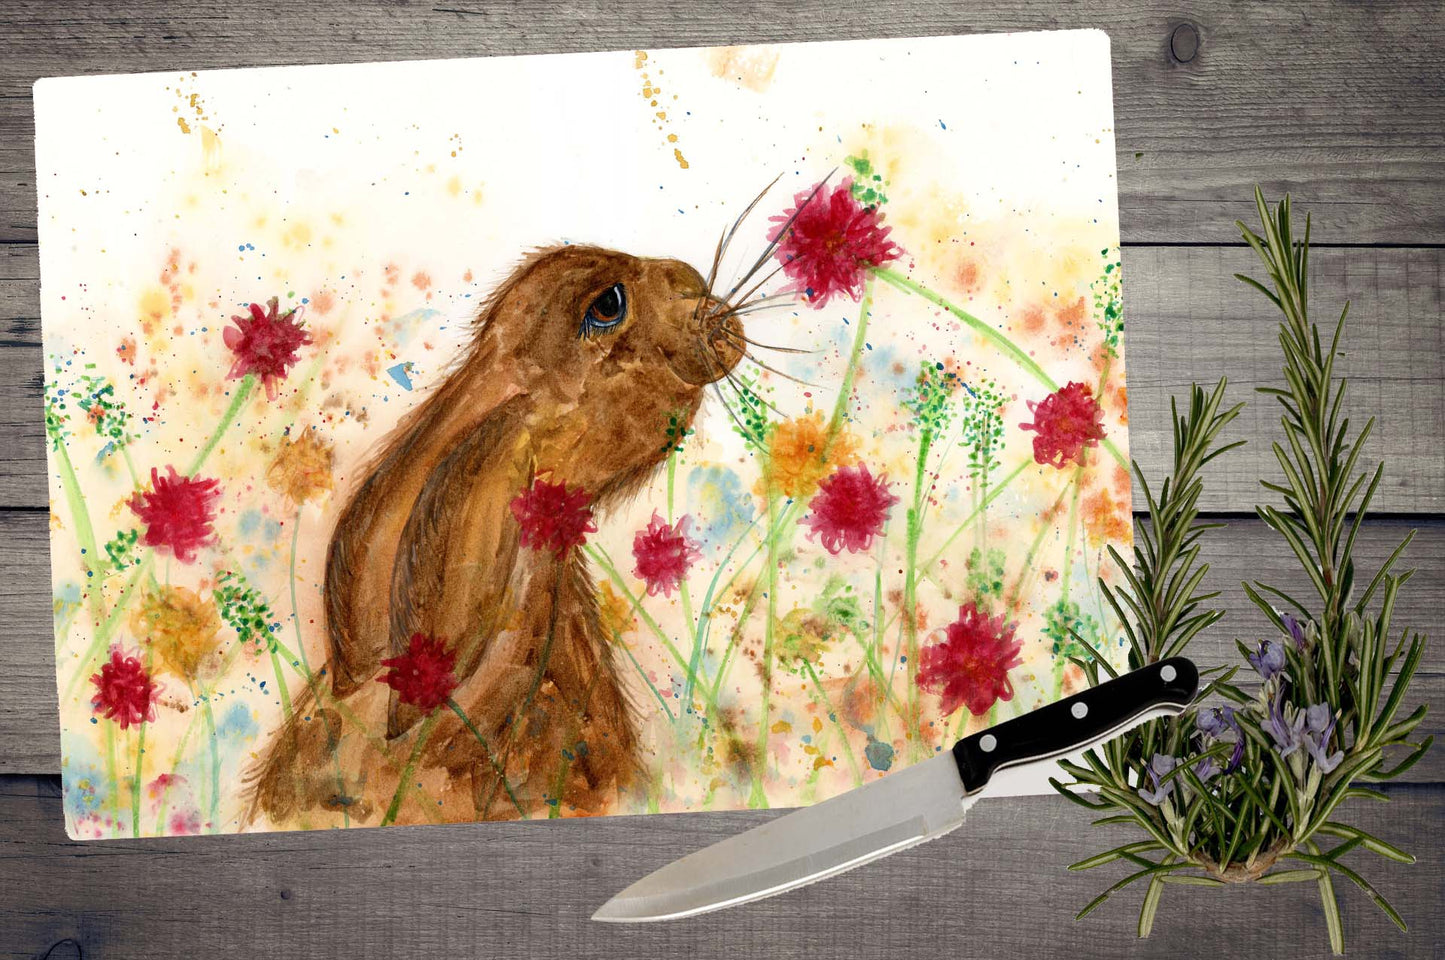 Hare chopping board / Worktop saver